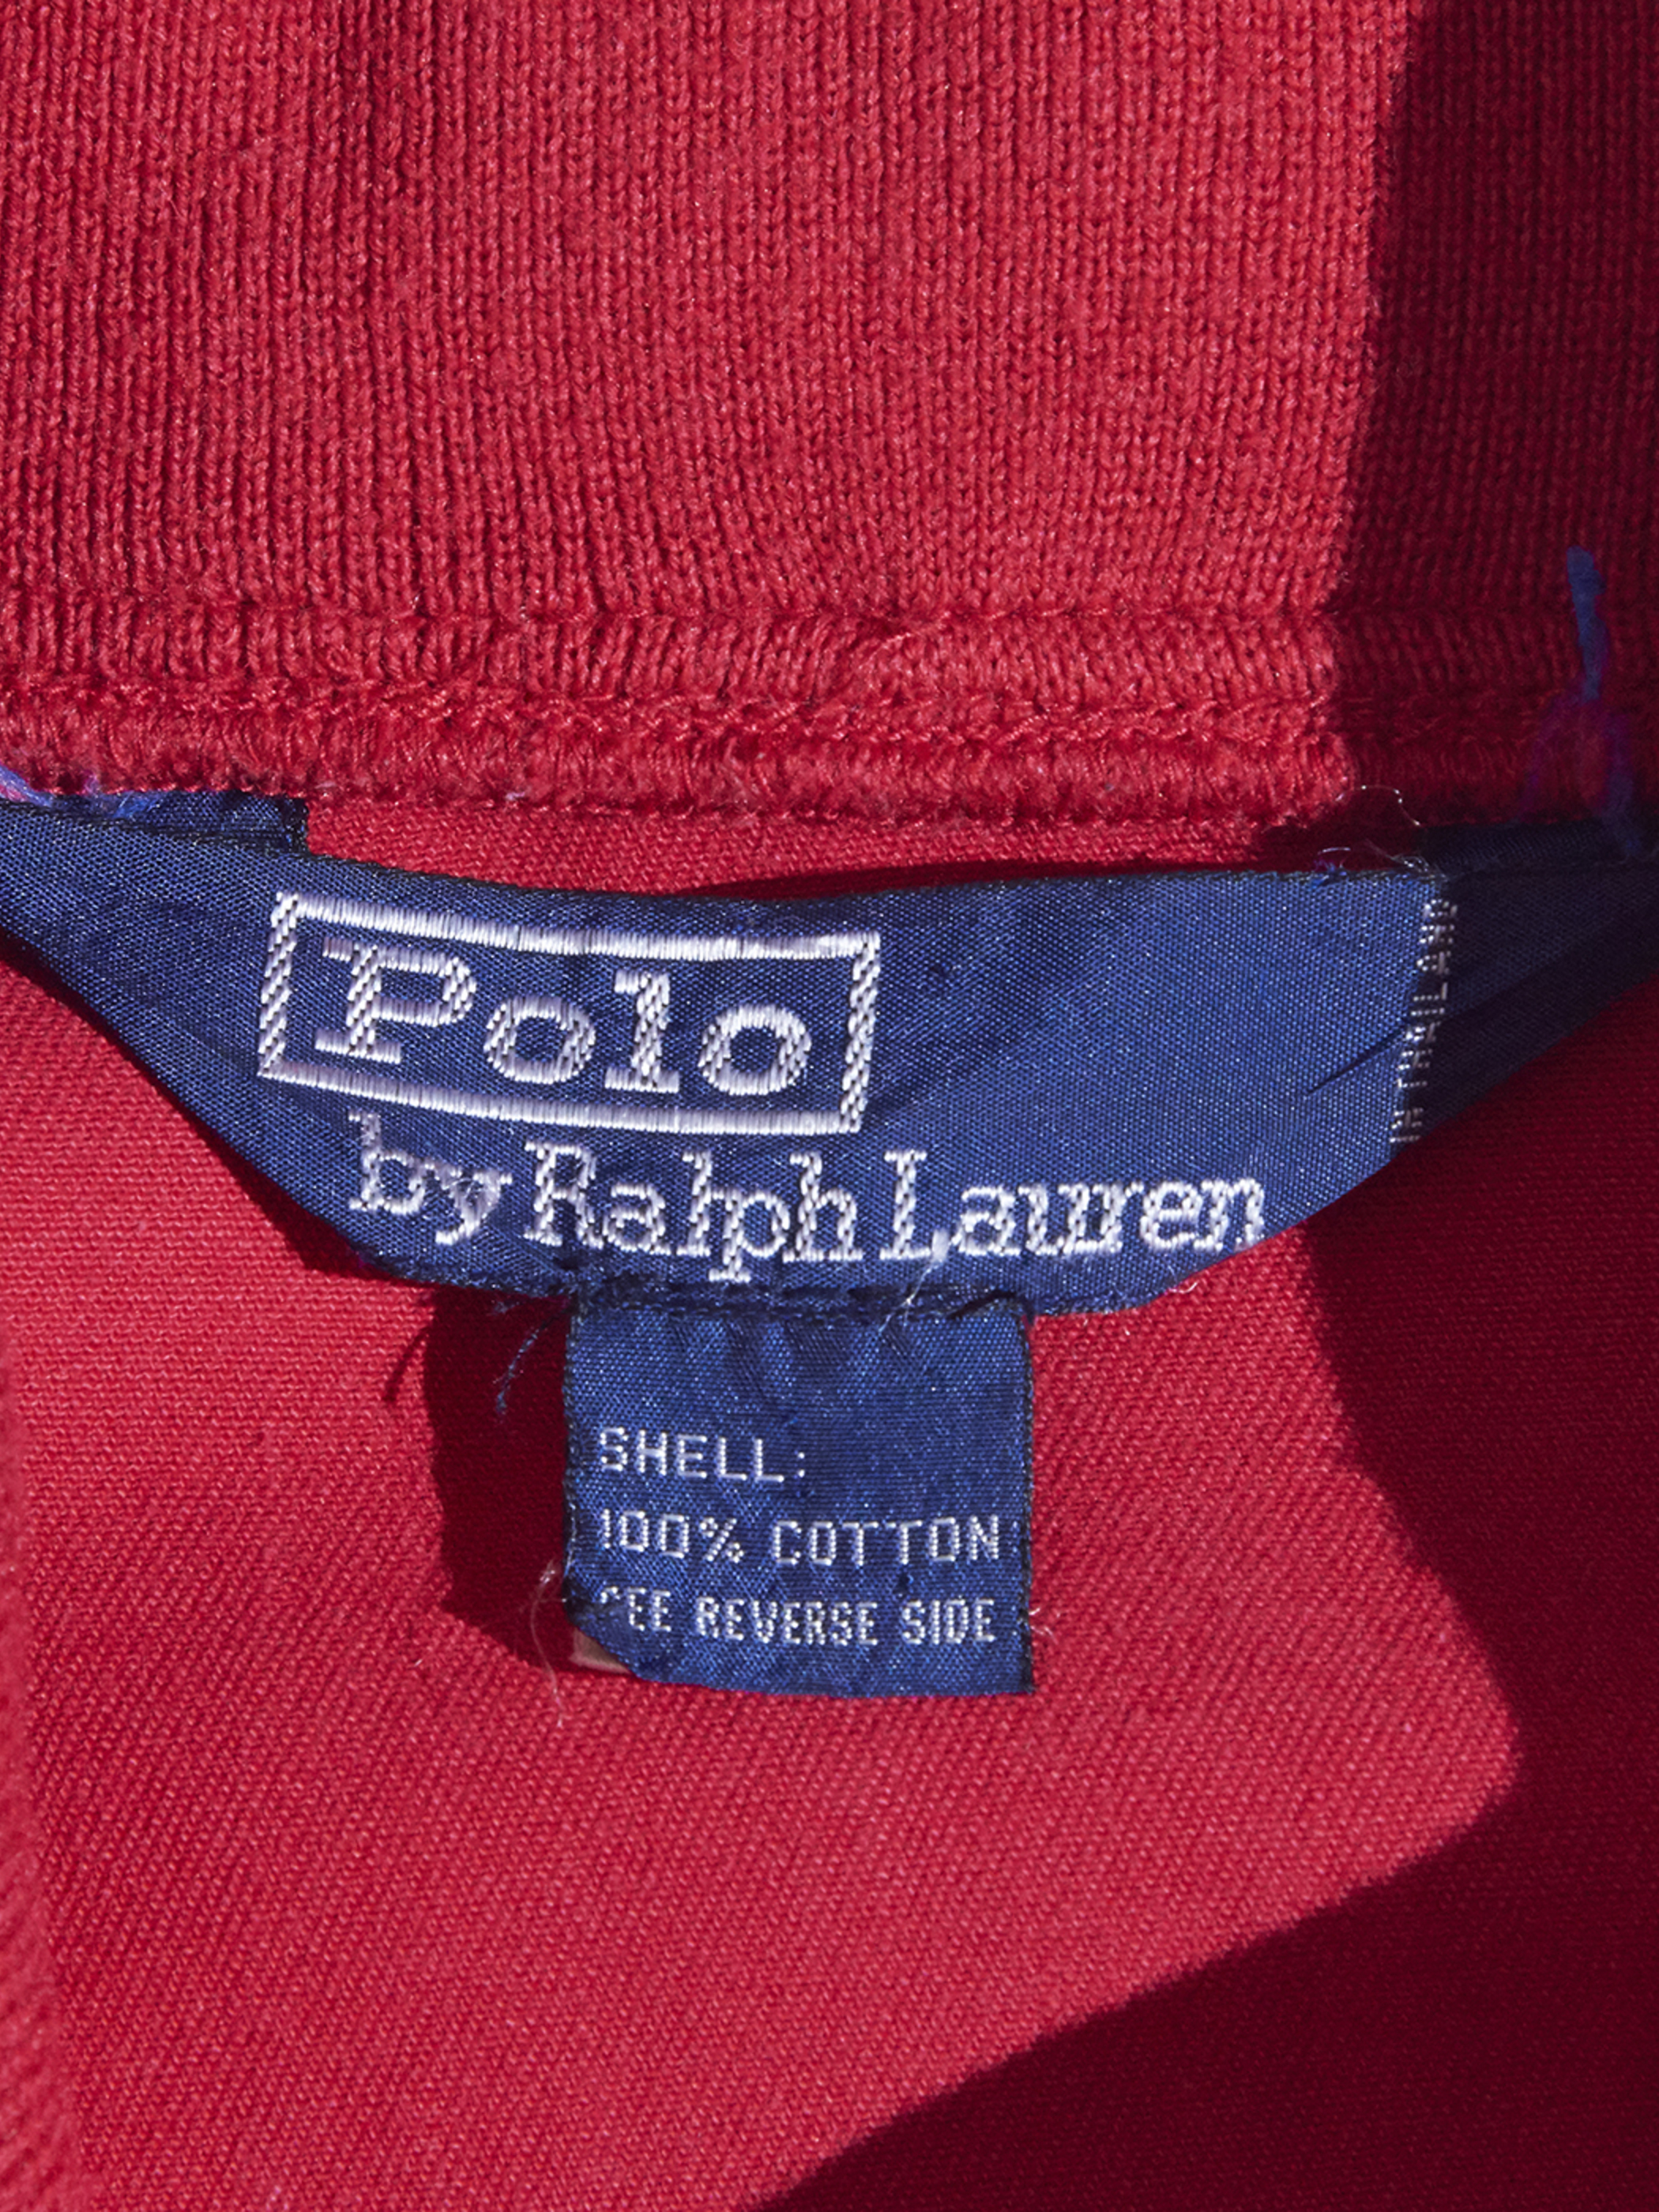 1990s "POLO by Ralph Lauren" cotton clicker blouson -RED-